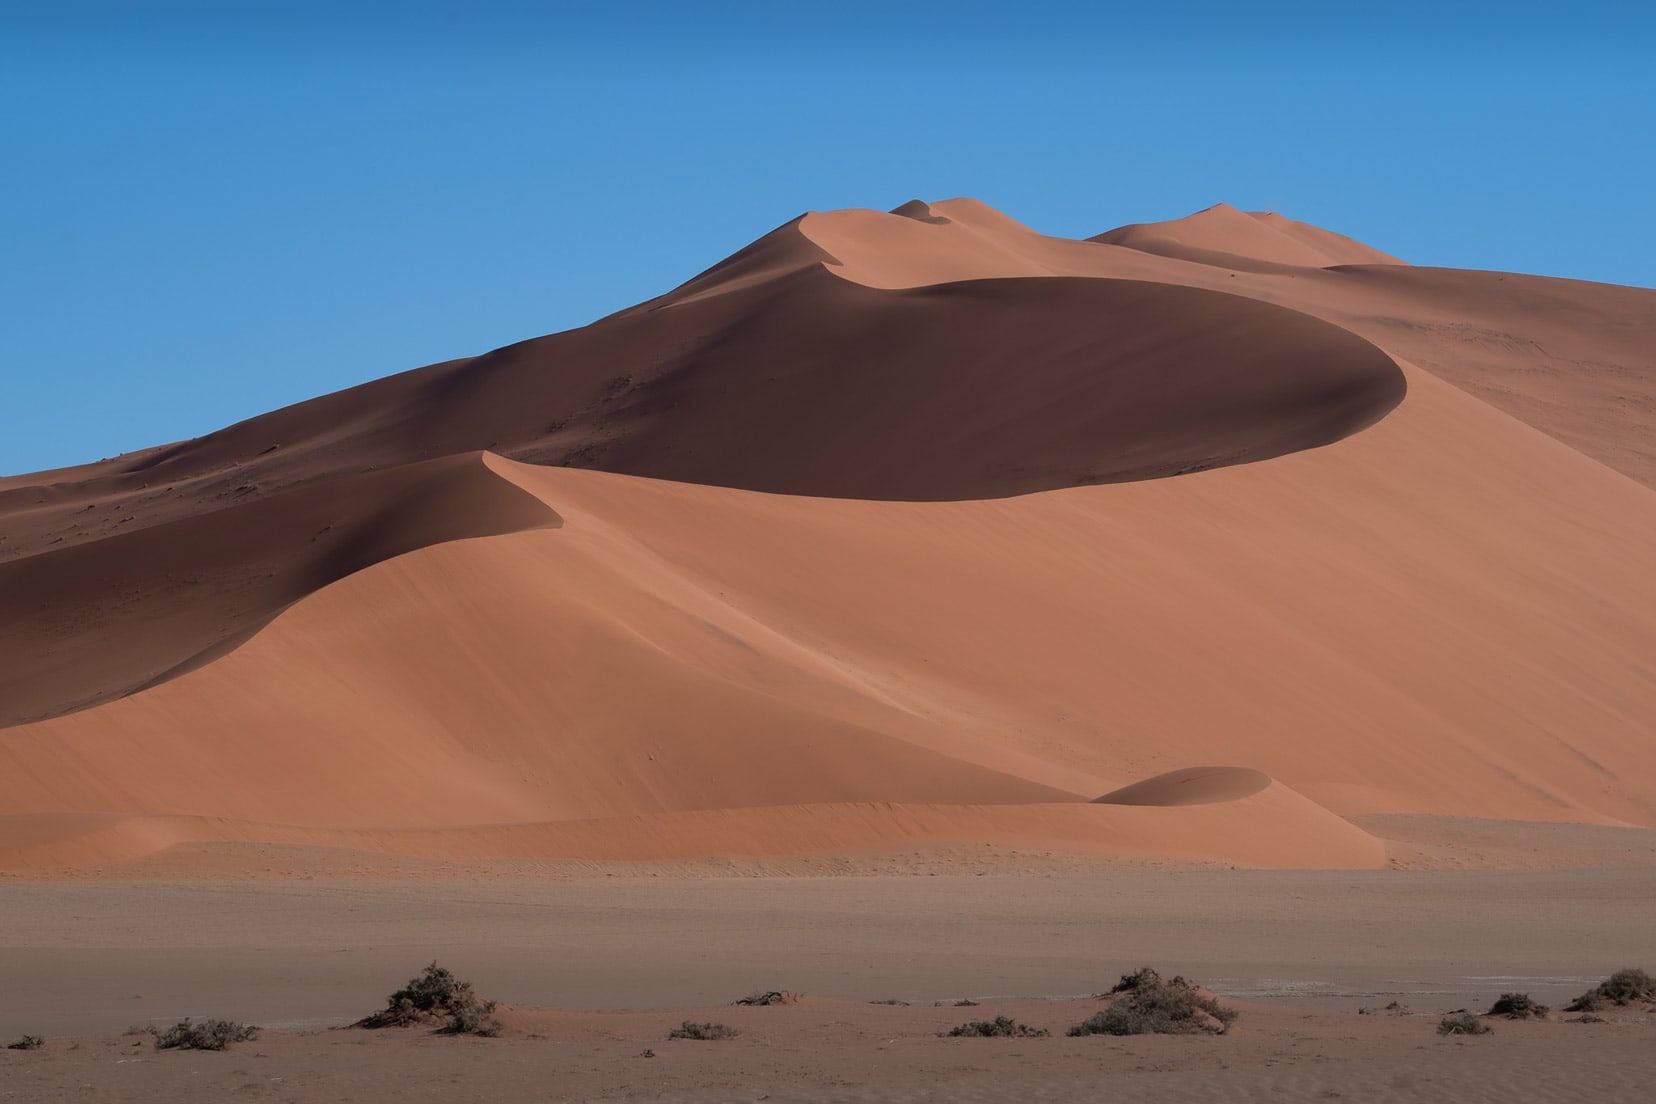 Swirly patterned ridge of red sand dune